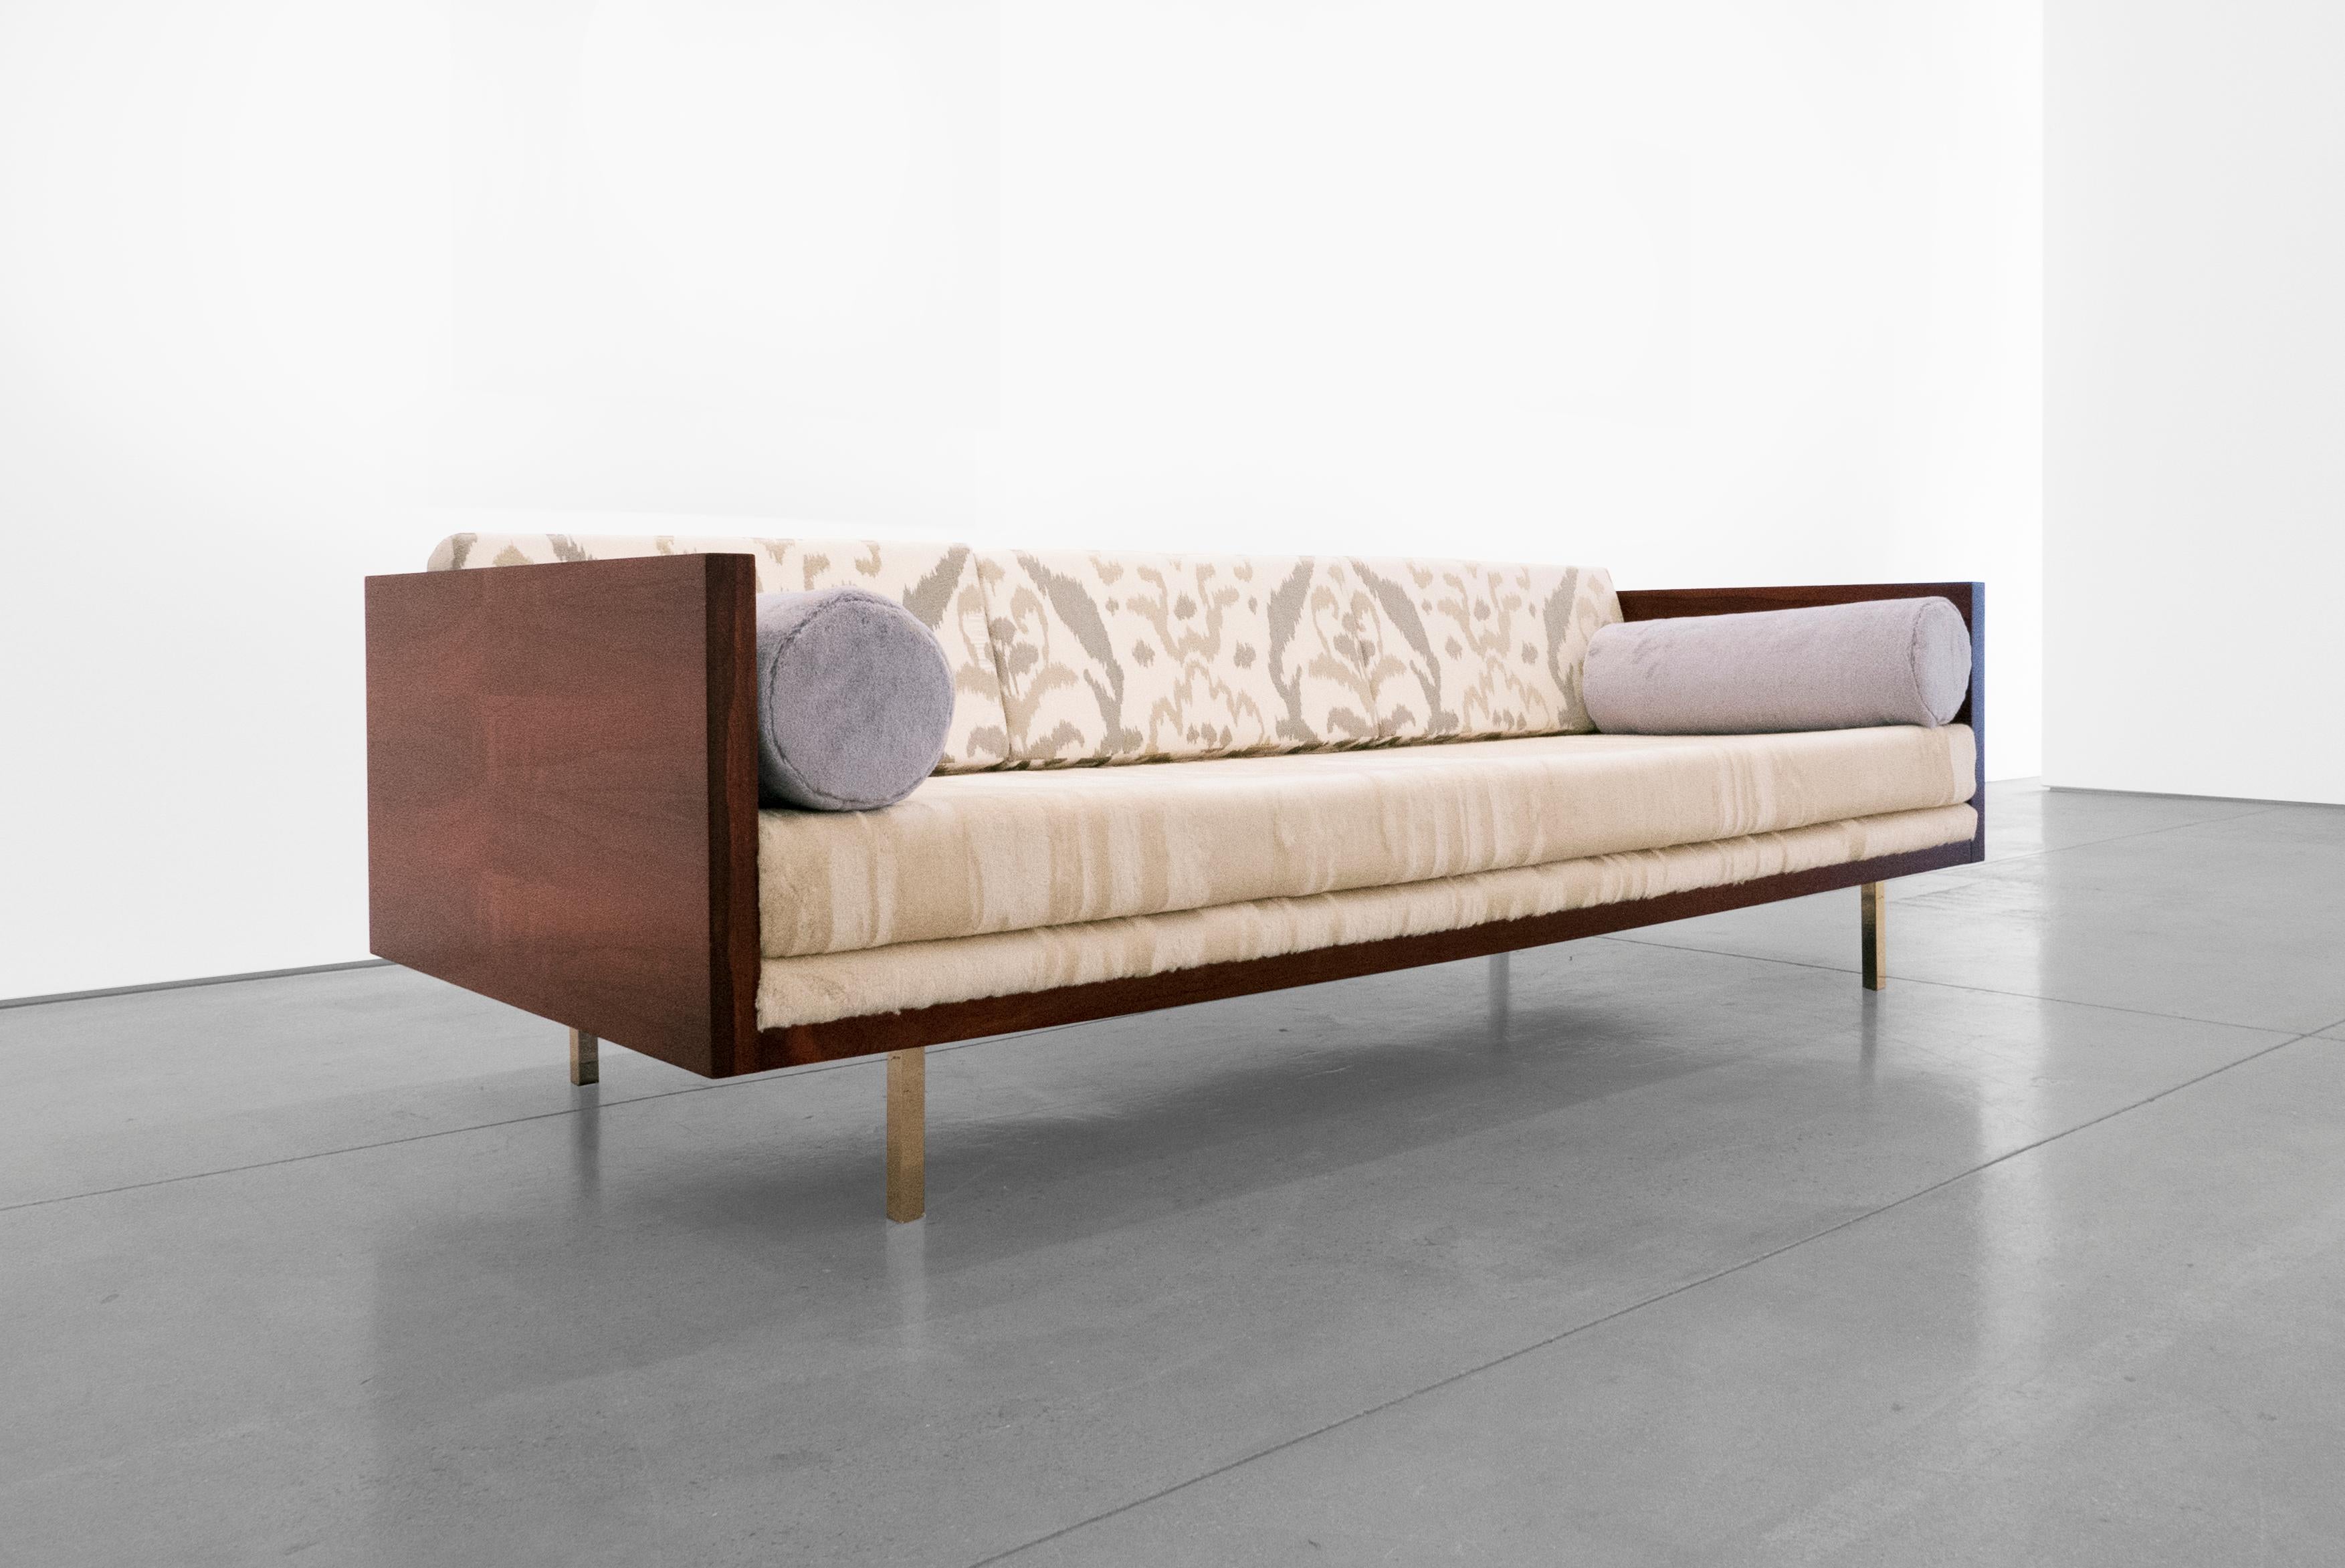 Mid-Century Modern Milo Baughman, Rosewood Case Sofa, circa 1950 - 1959